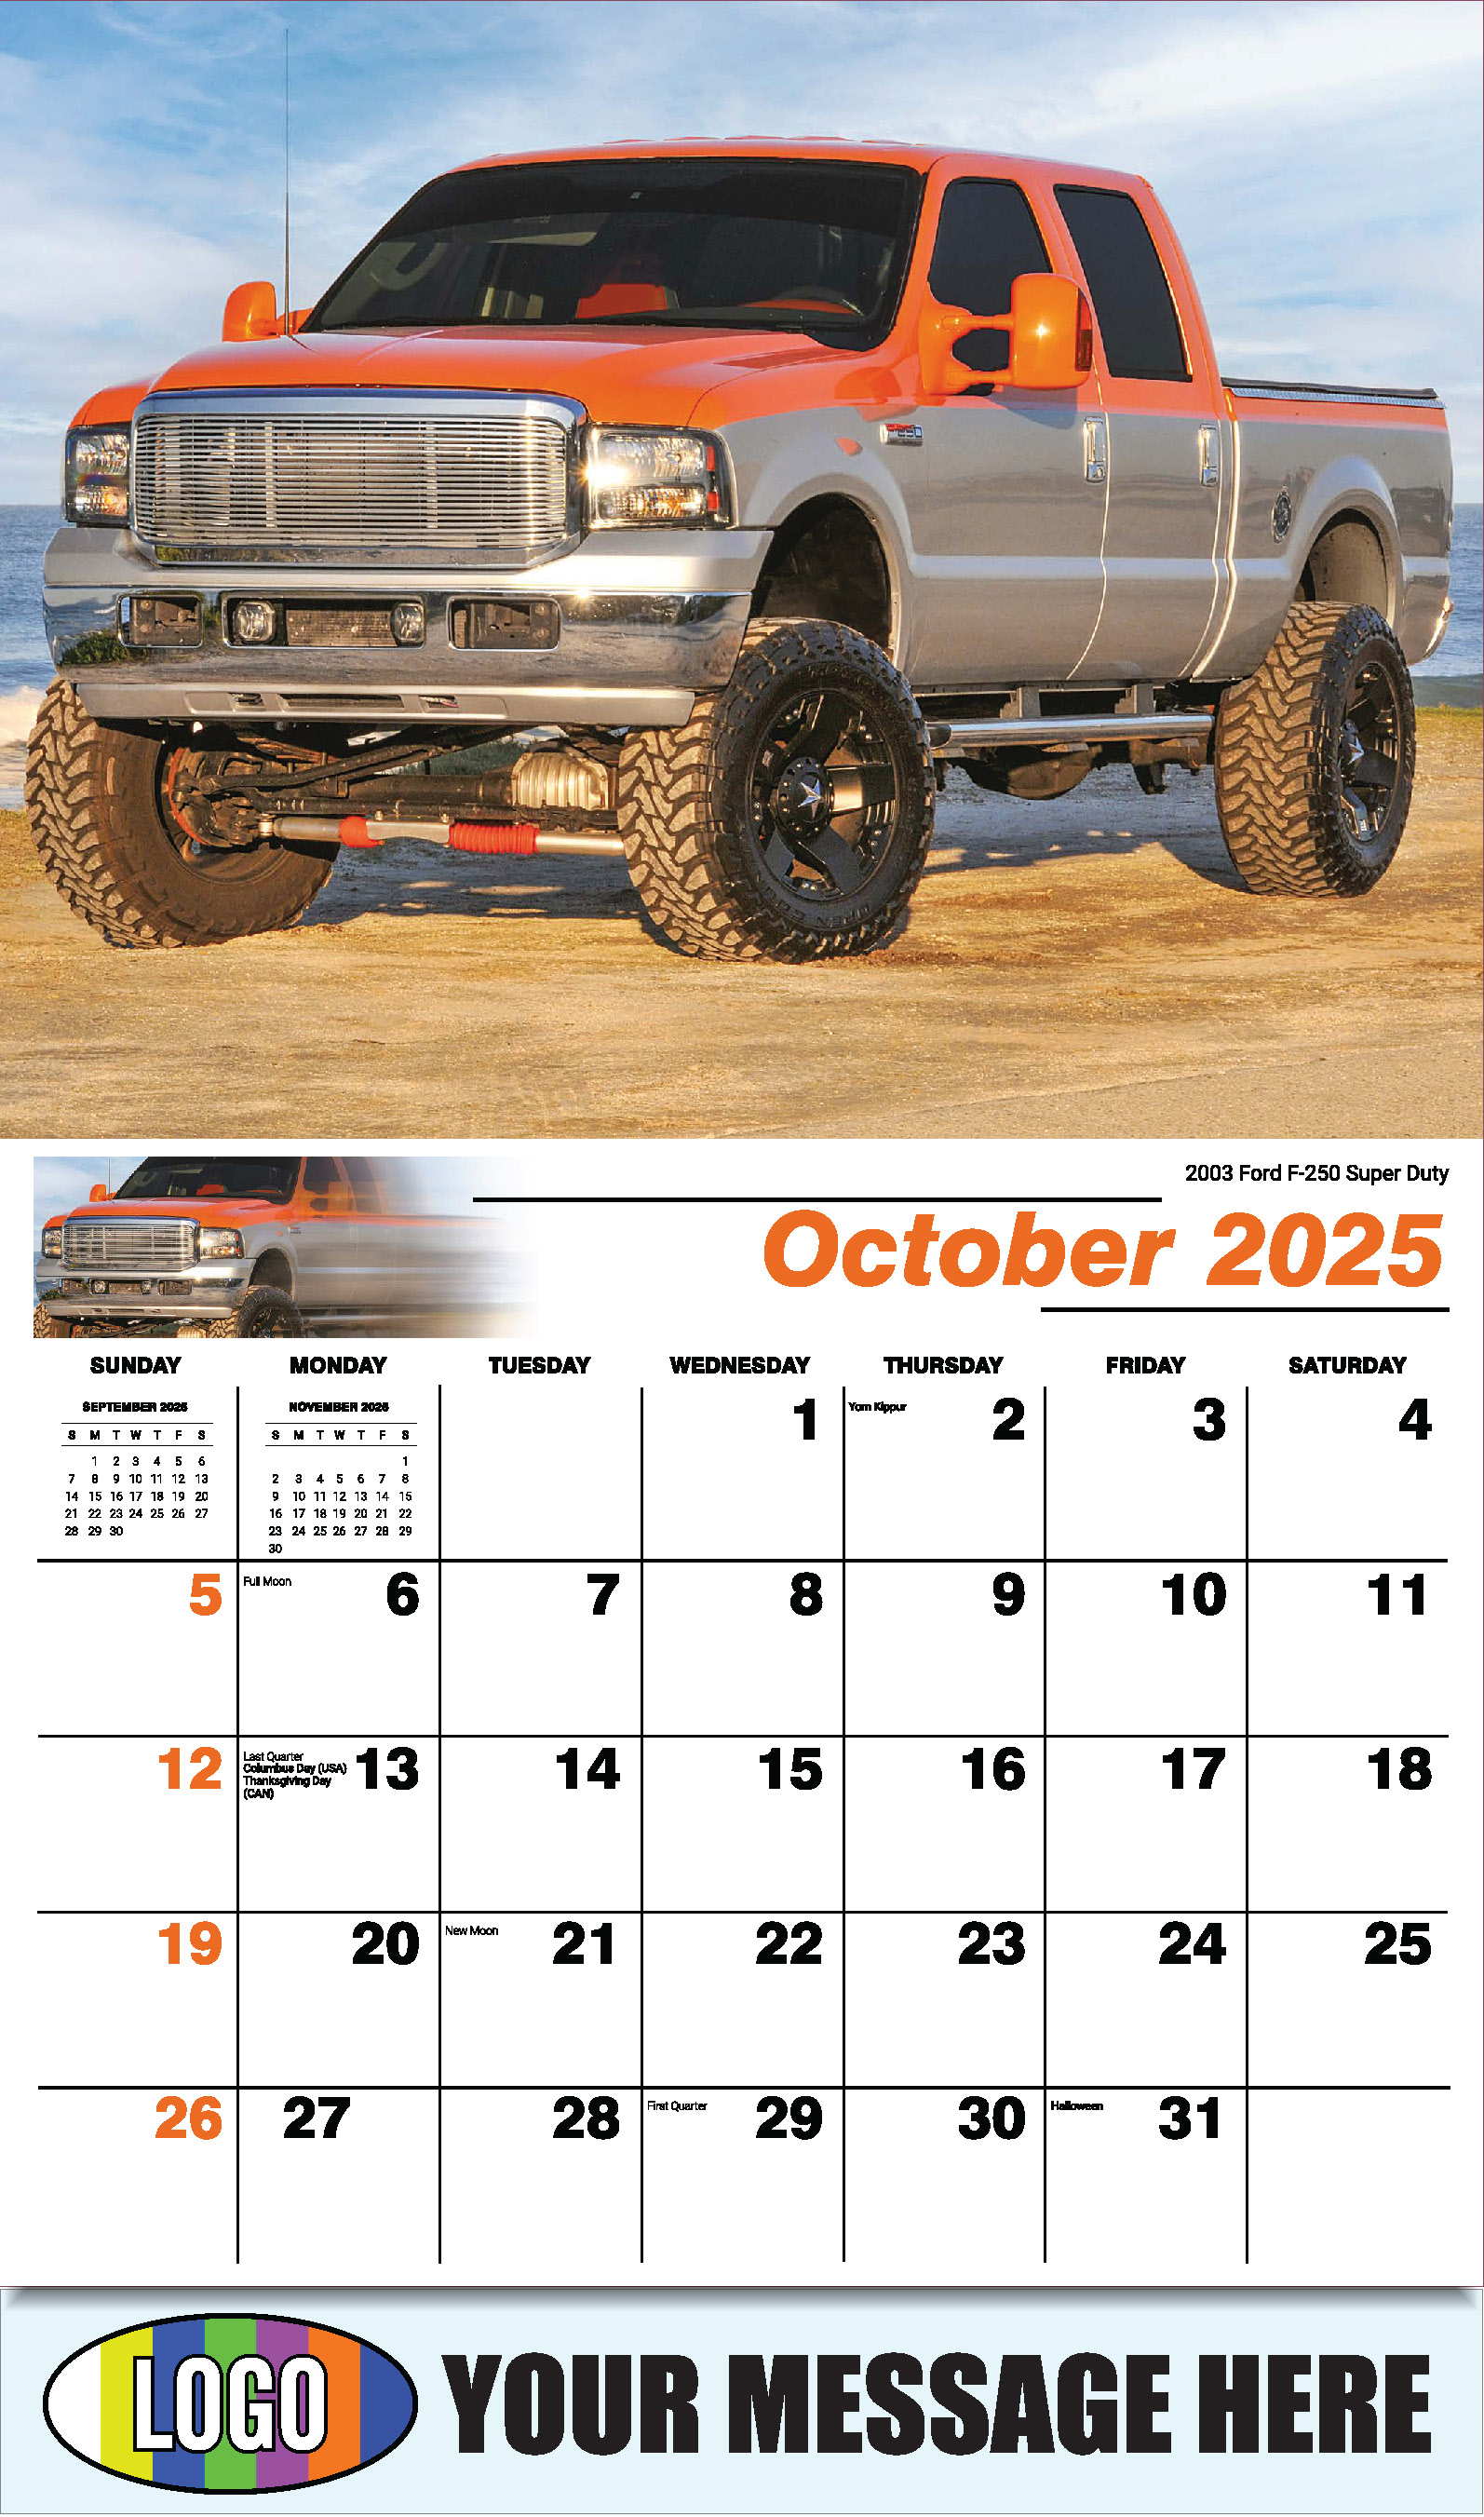 Pumped-Up Pickups 2025 Automotive Business Promo Calendar - October